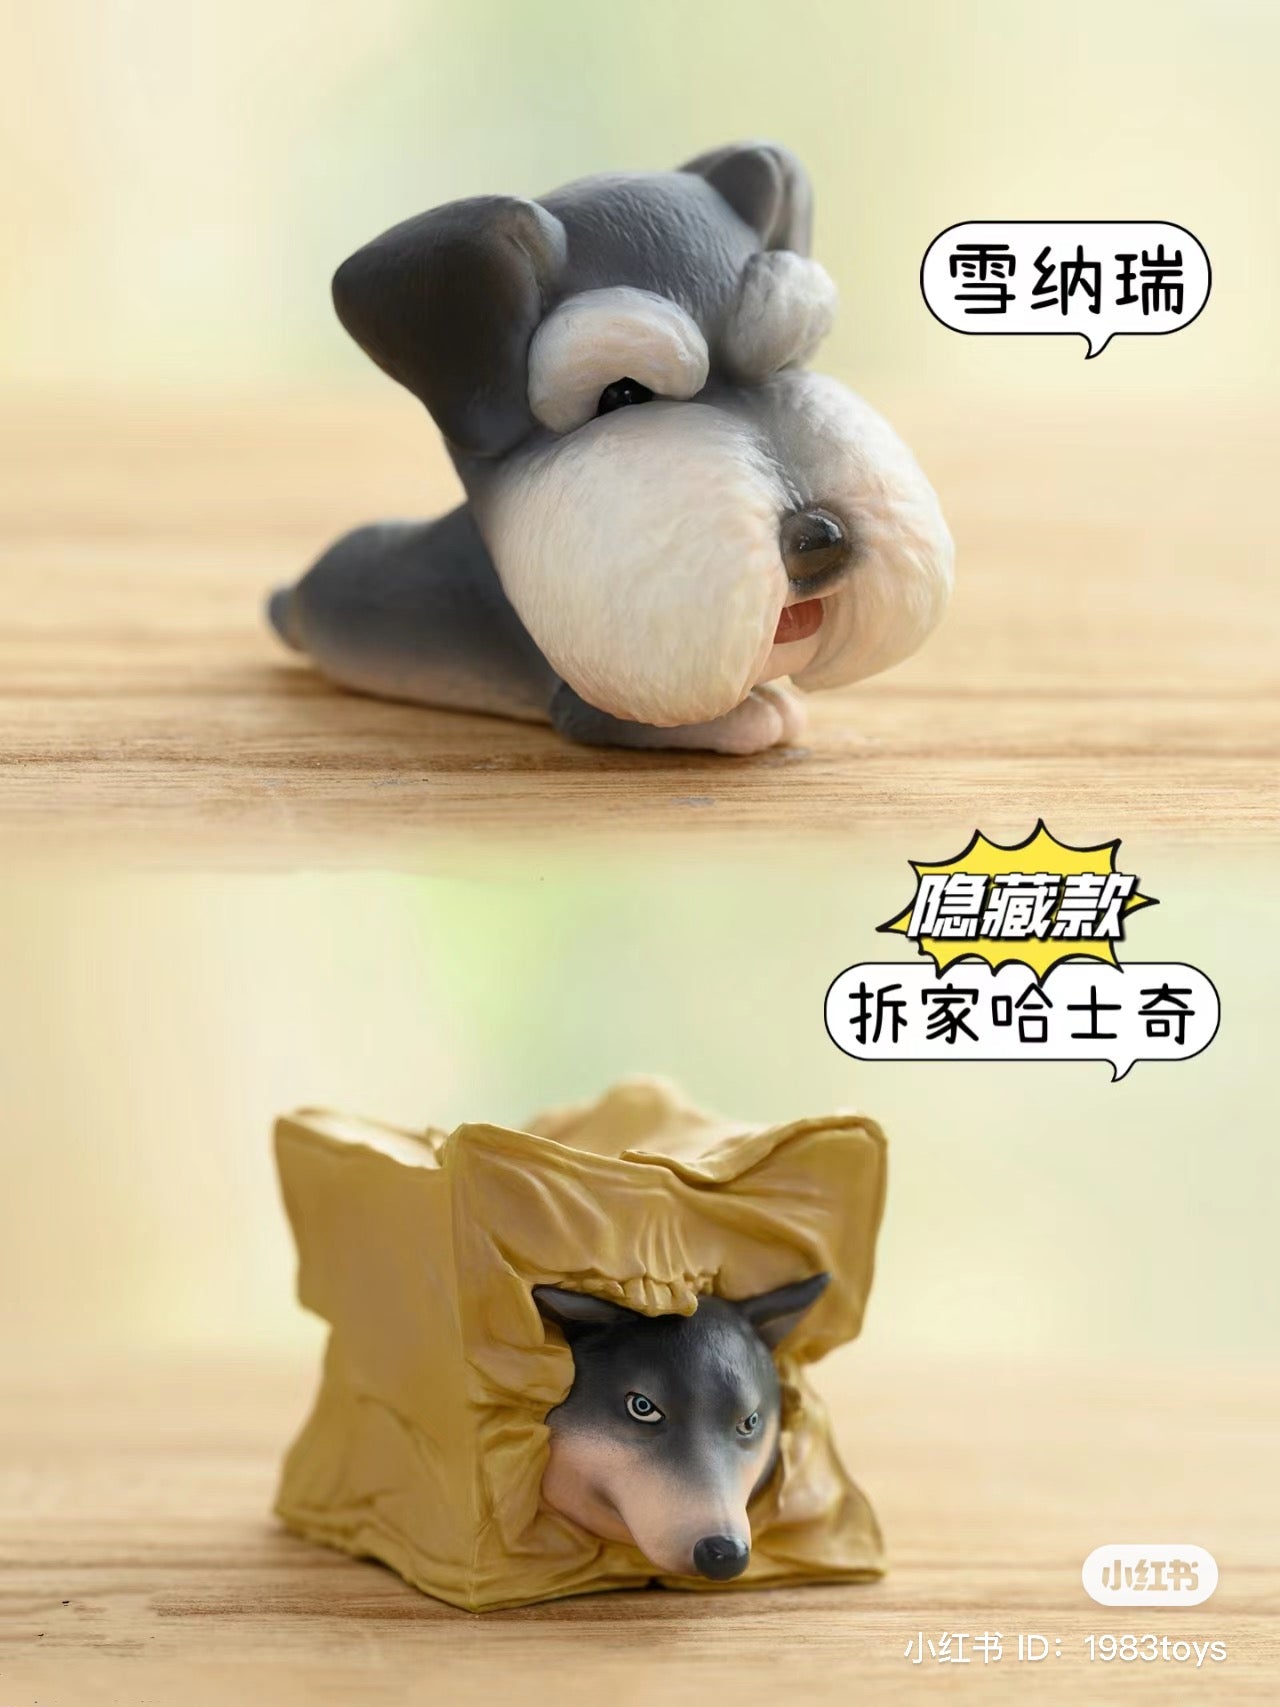 Cute Dog Story Blind Box Series – Strangecat Toys